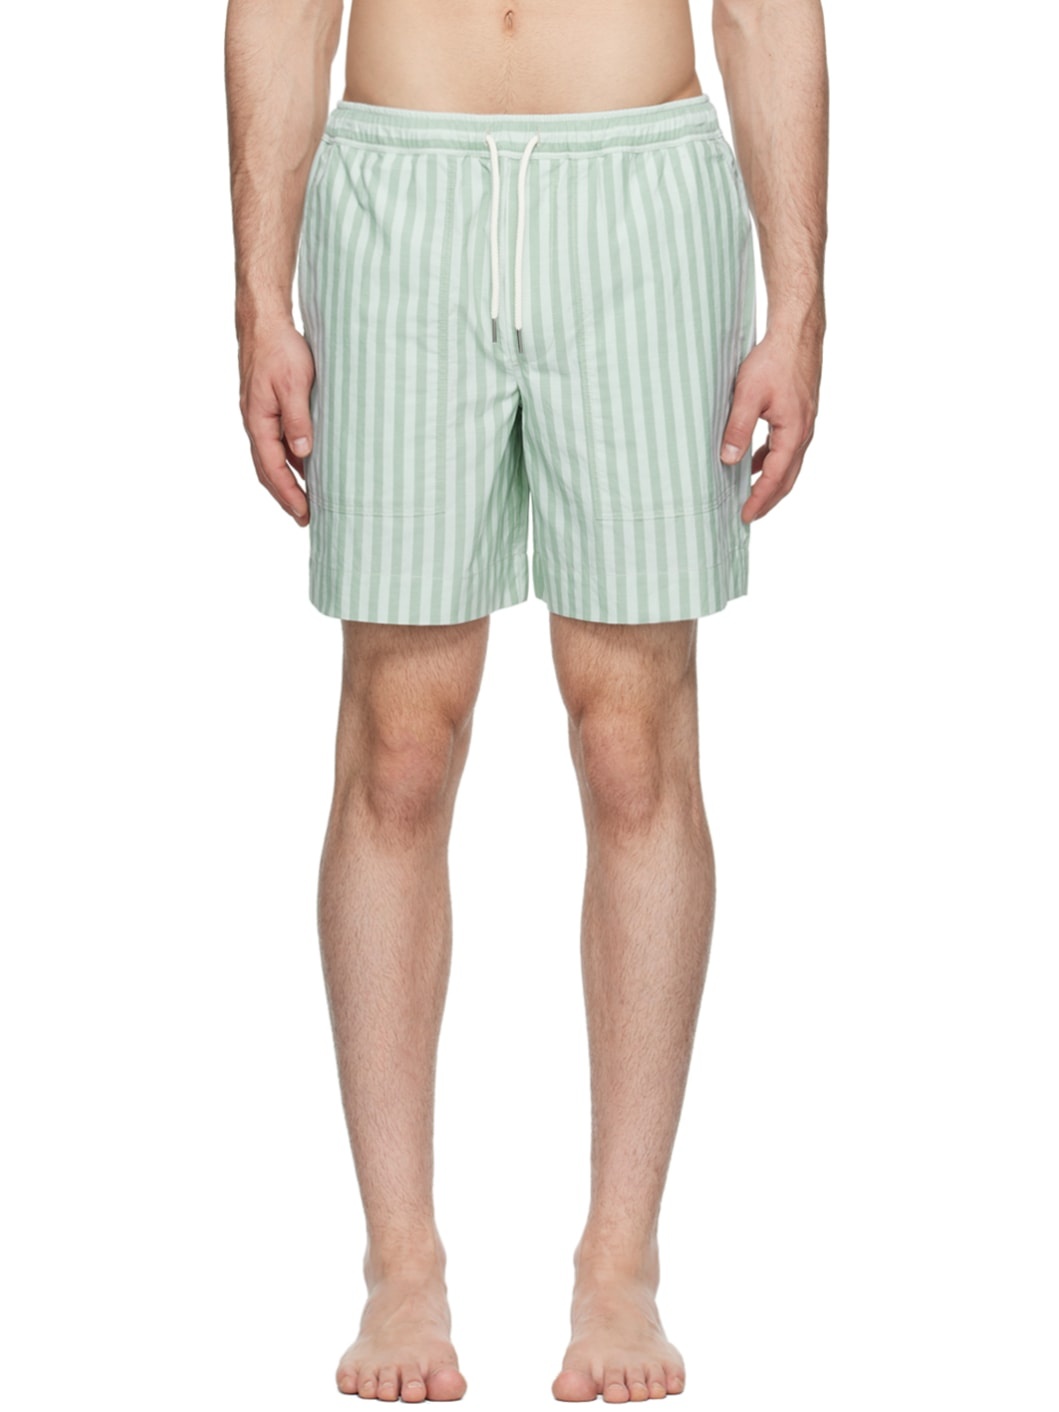 Green Striped Shorts - 1